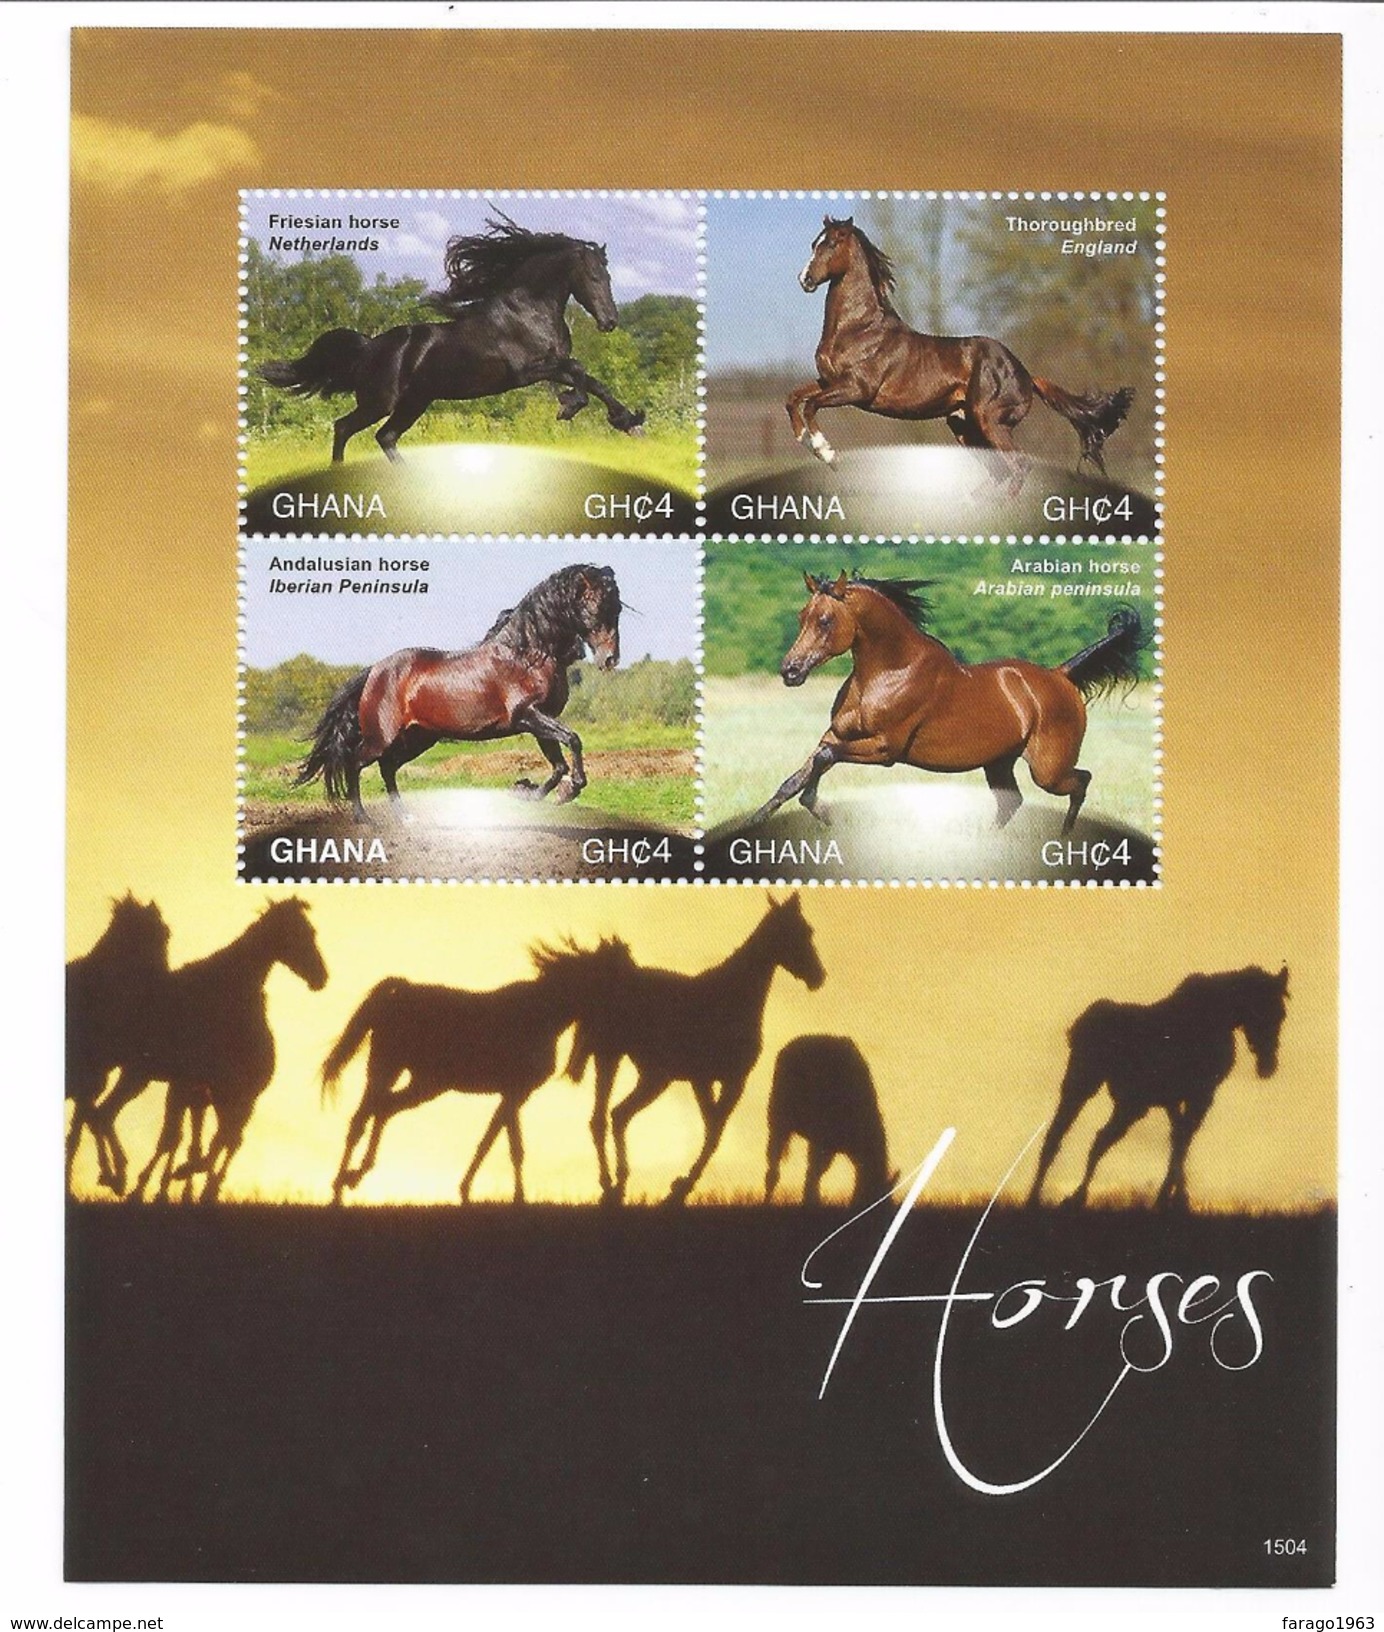 2015 Ghana Horses  Complete Set Of 4 Sheets  MNH  BELOW FACE VALUE - Ghana (1957-...)